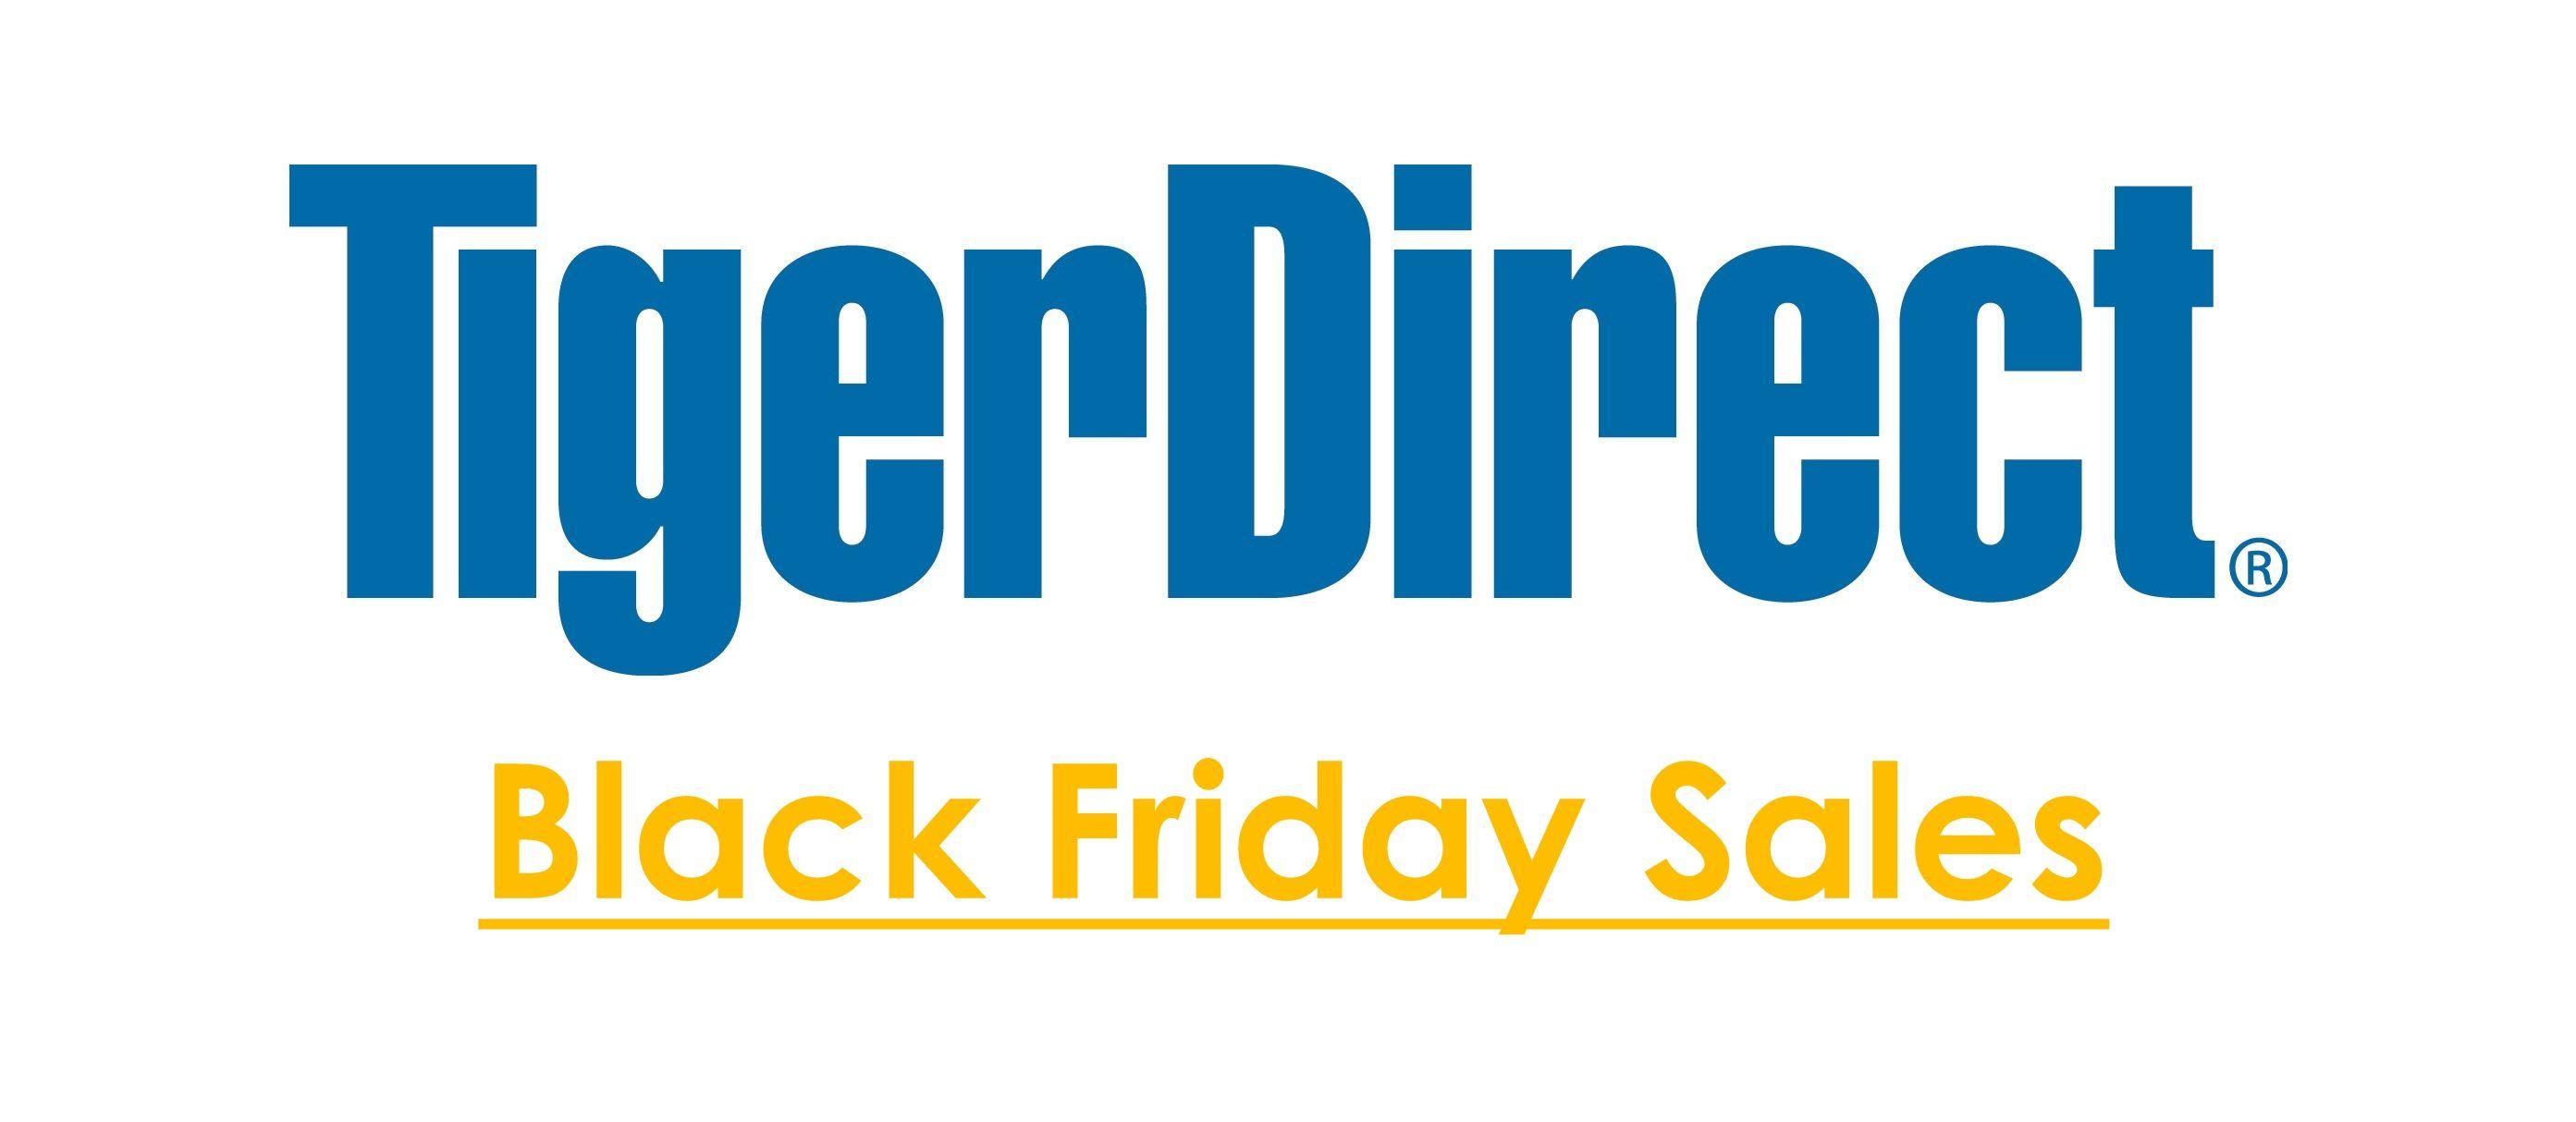 TigerDirect Logo - TigerDirect Black Friday 2018 Deals, Discounts, and Sales